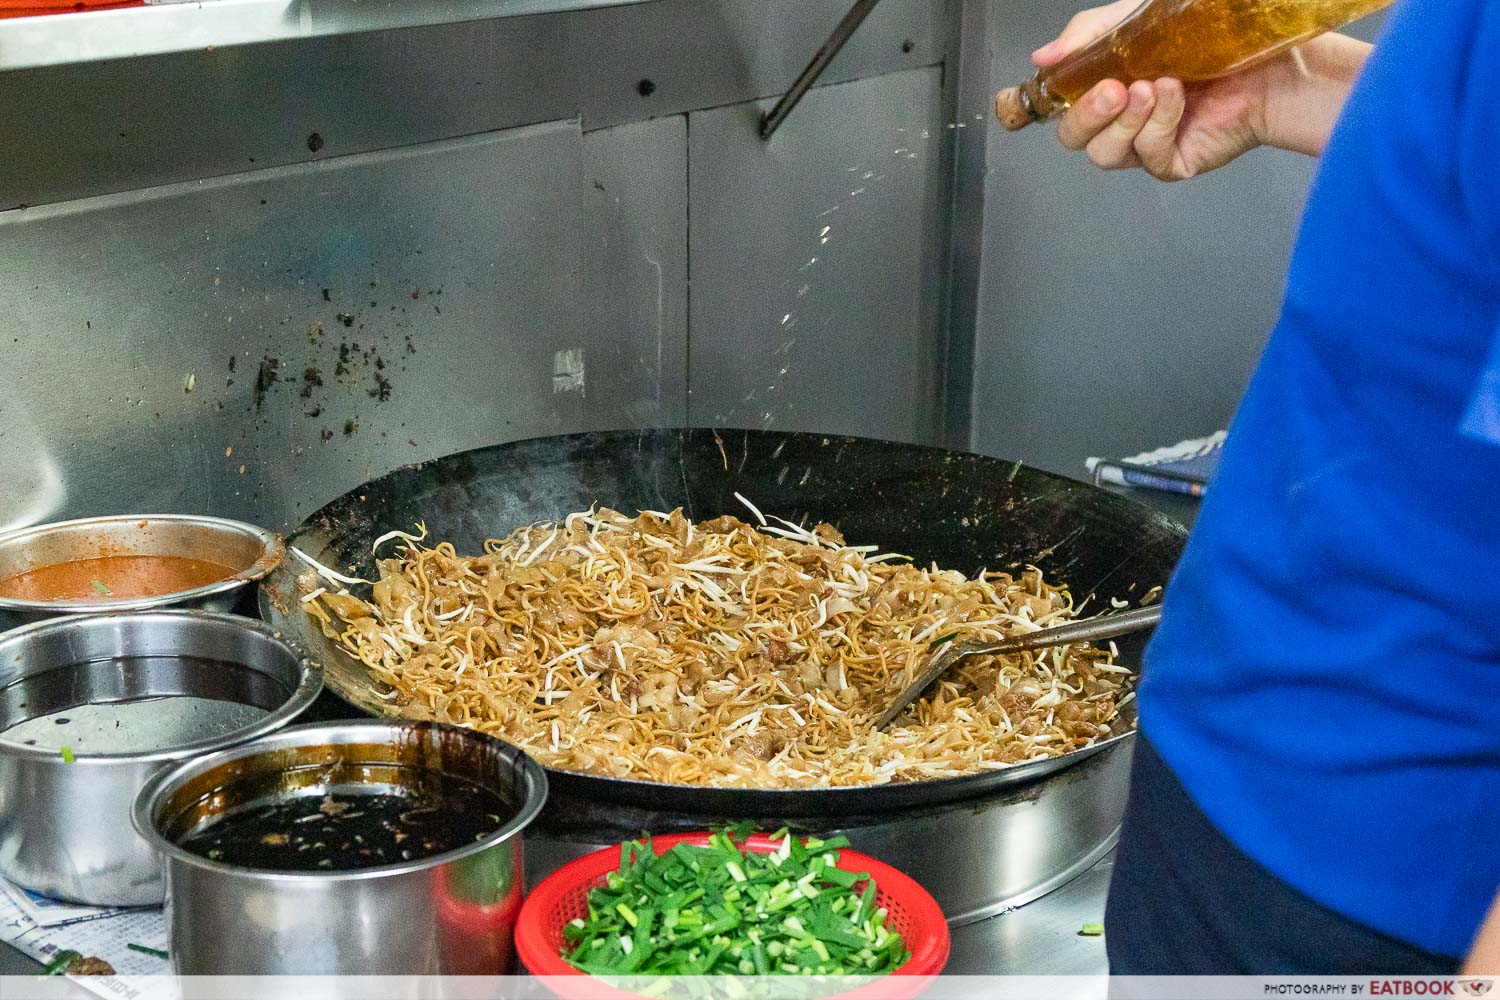 hill street char kway teow - frying in wok